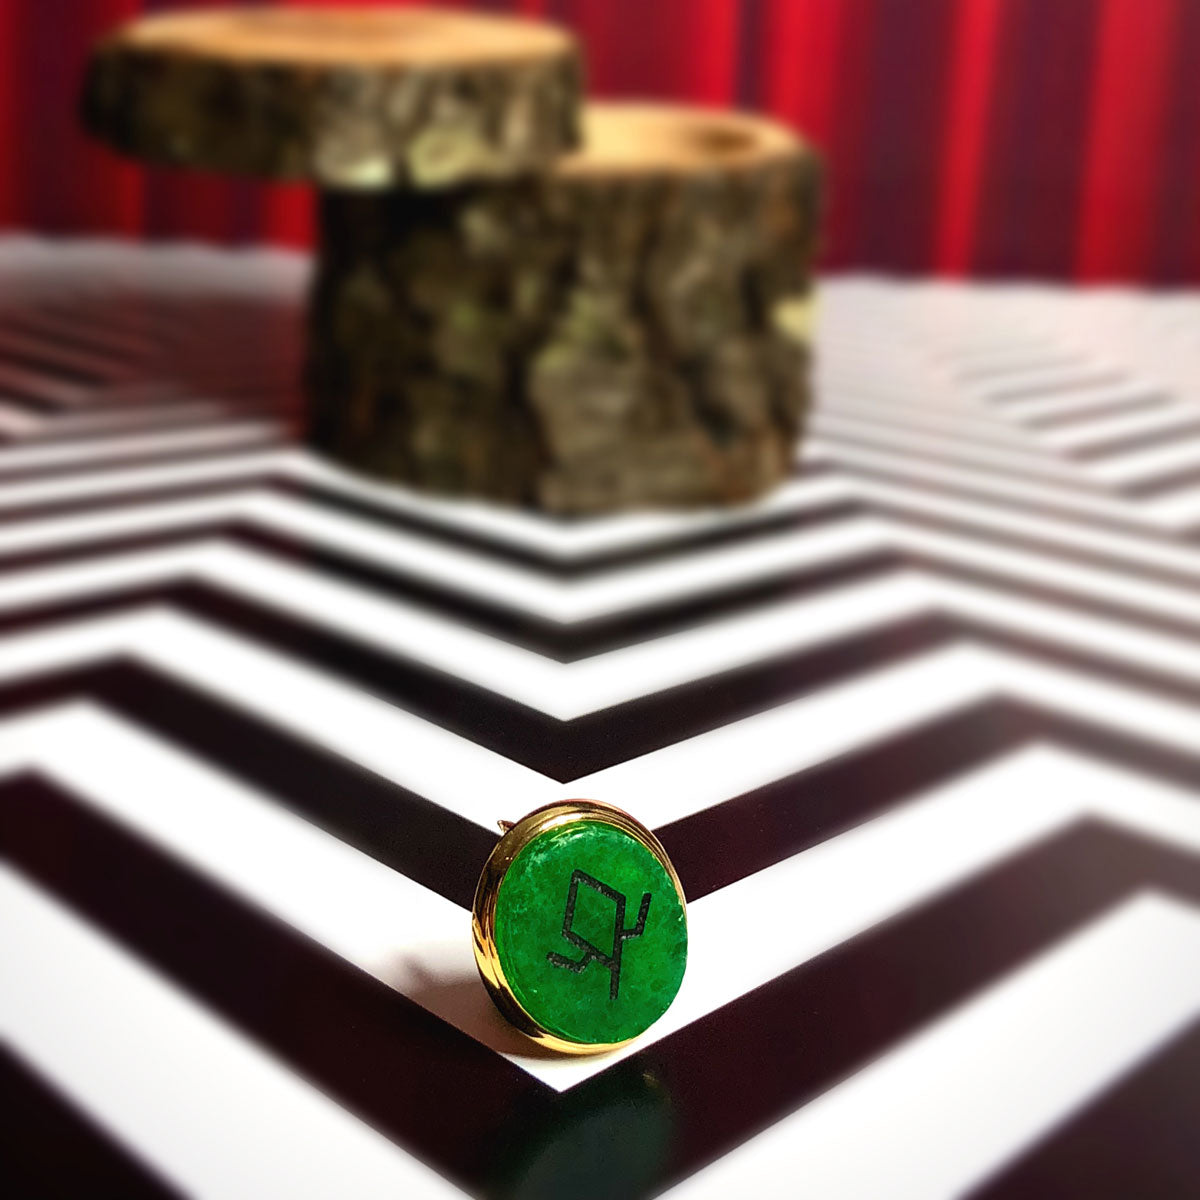 Twin Peaks - "The Ring" Pin